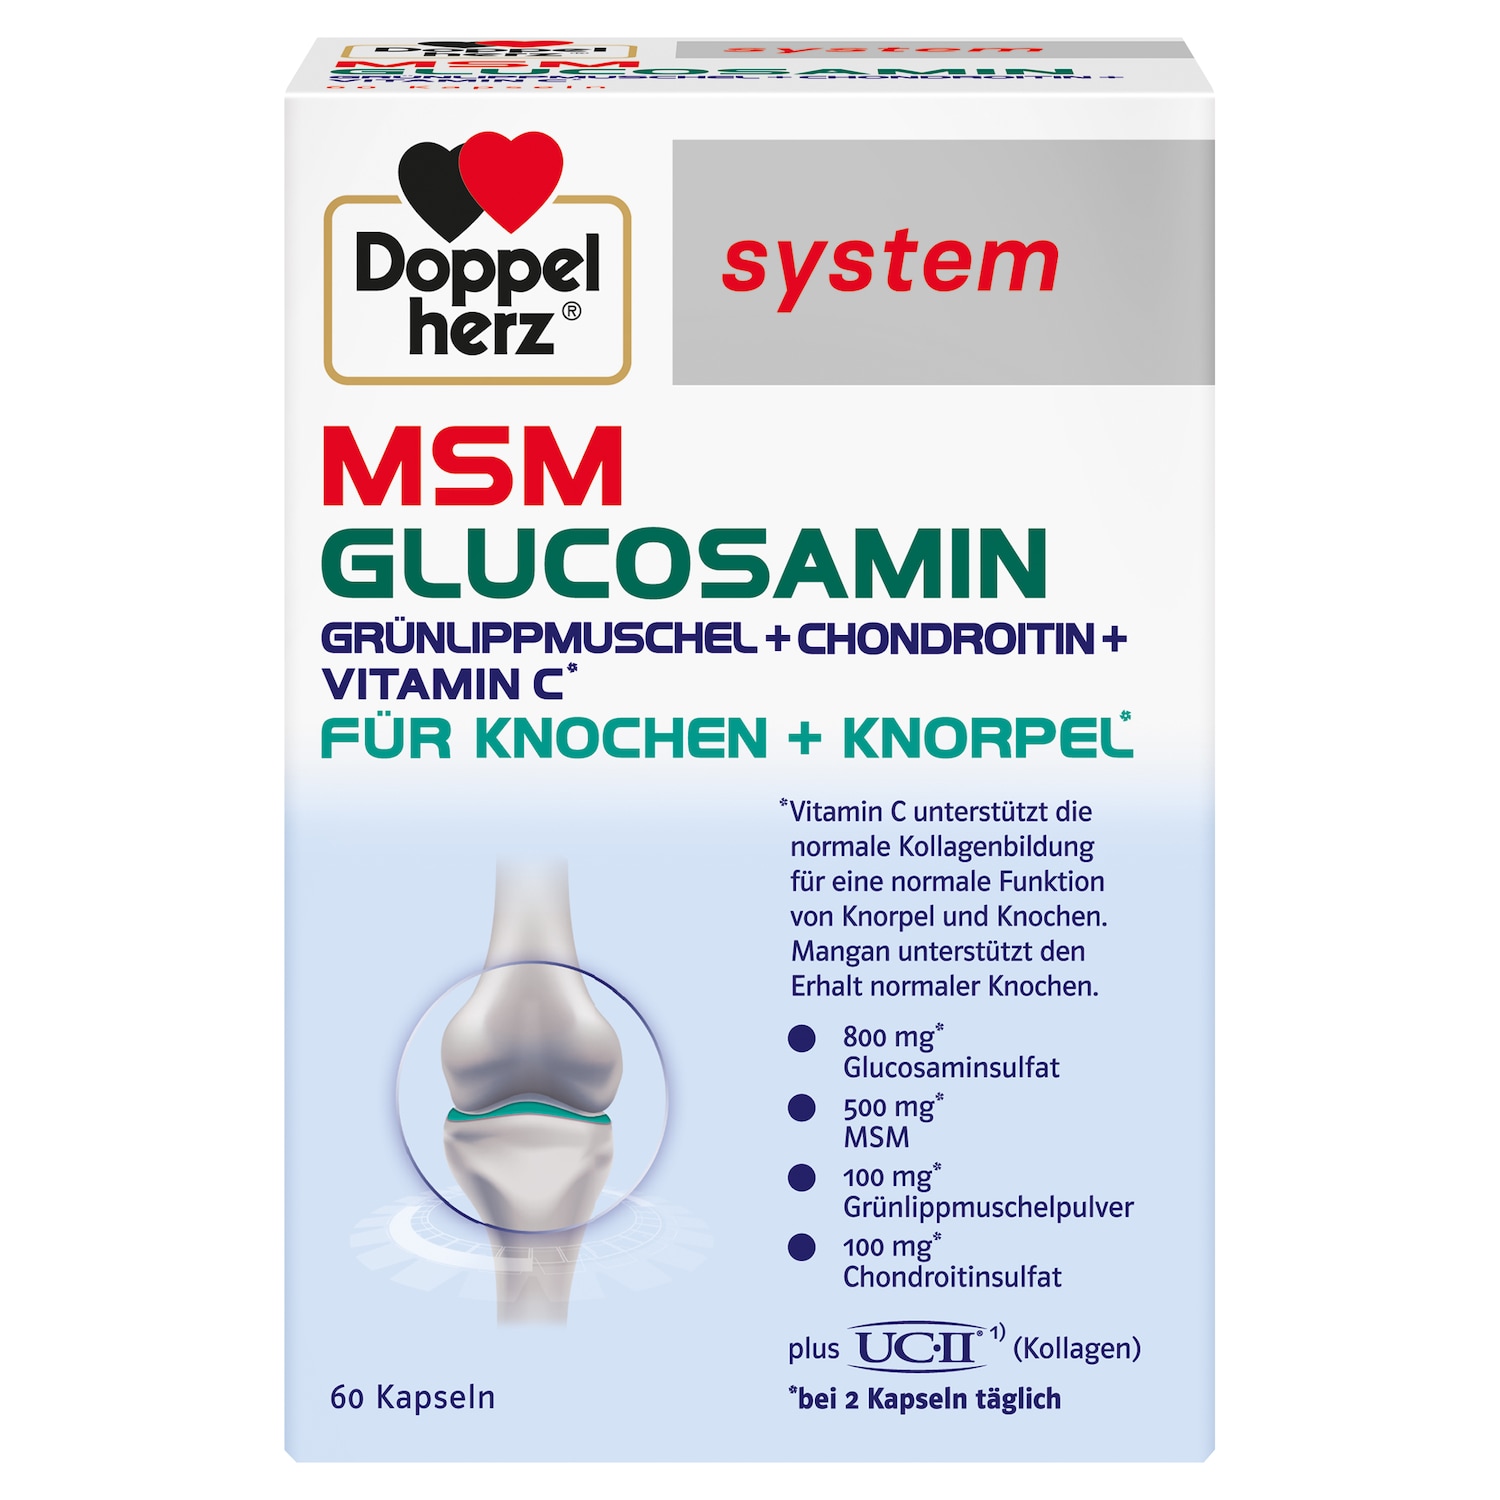 Queisser Pharma DOPPELHERZ MSM Glucosamine system Capsules